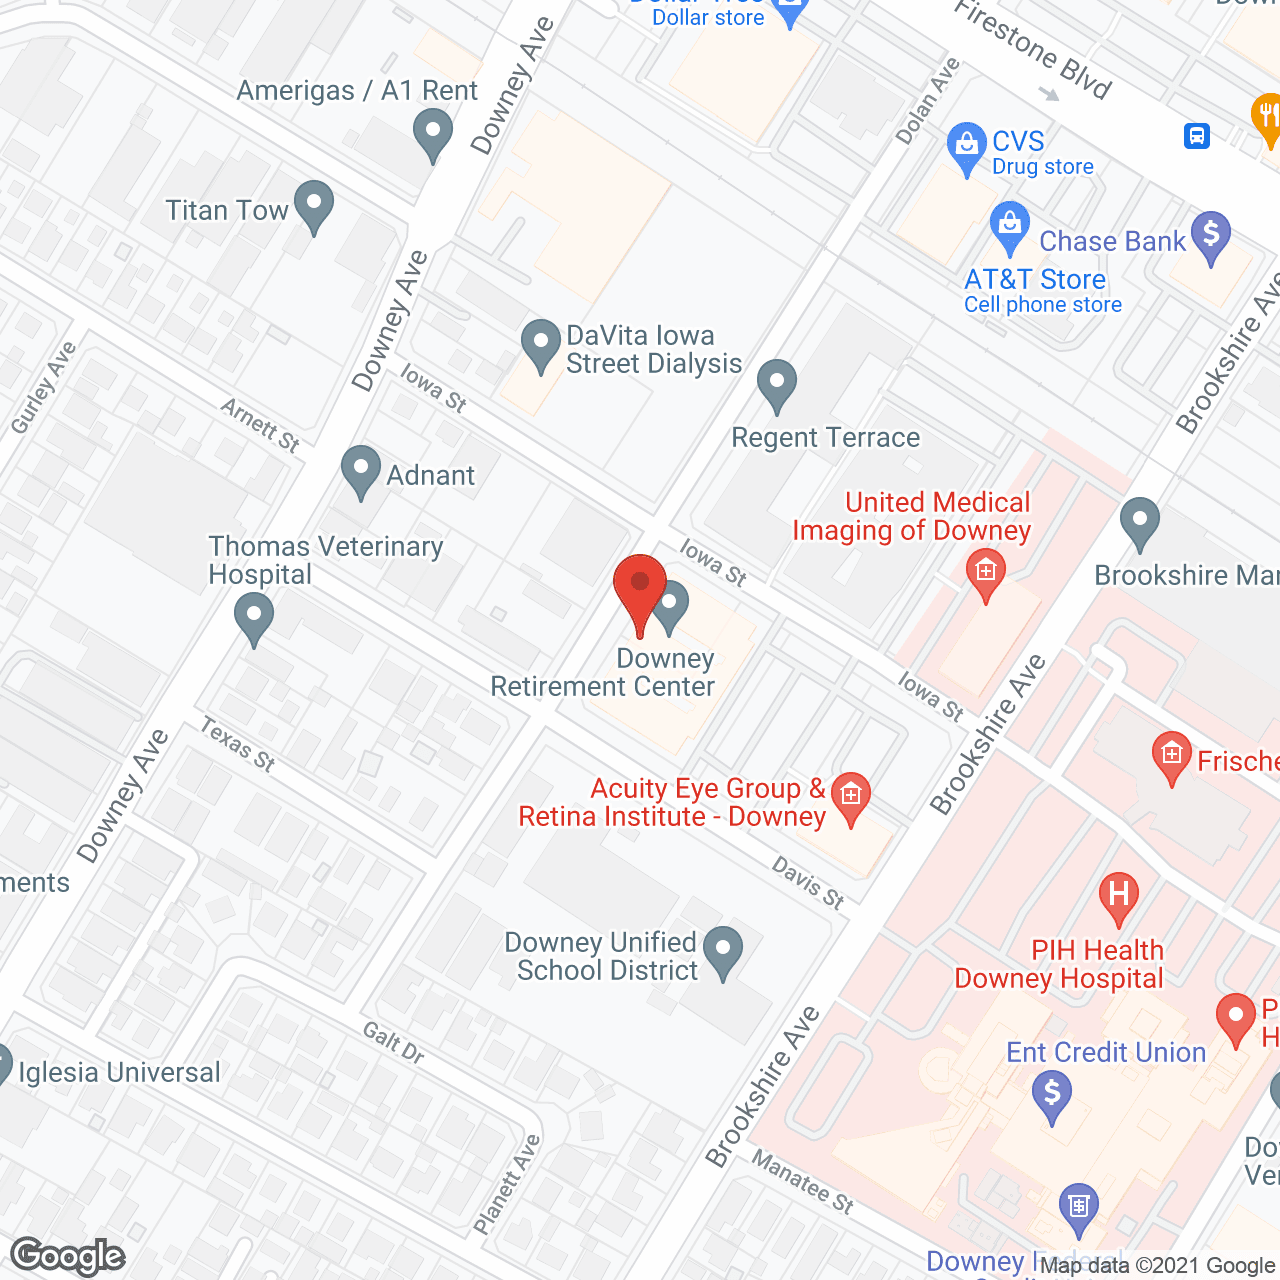 Downey Retirement Center in google map